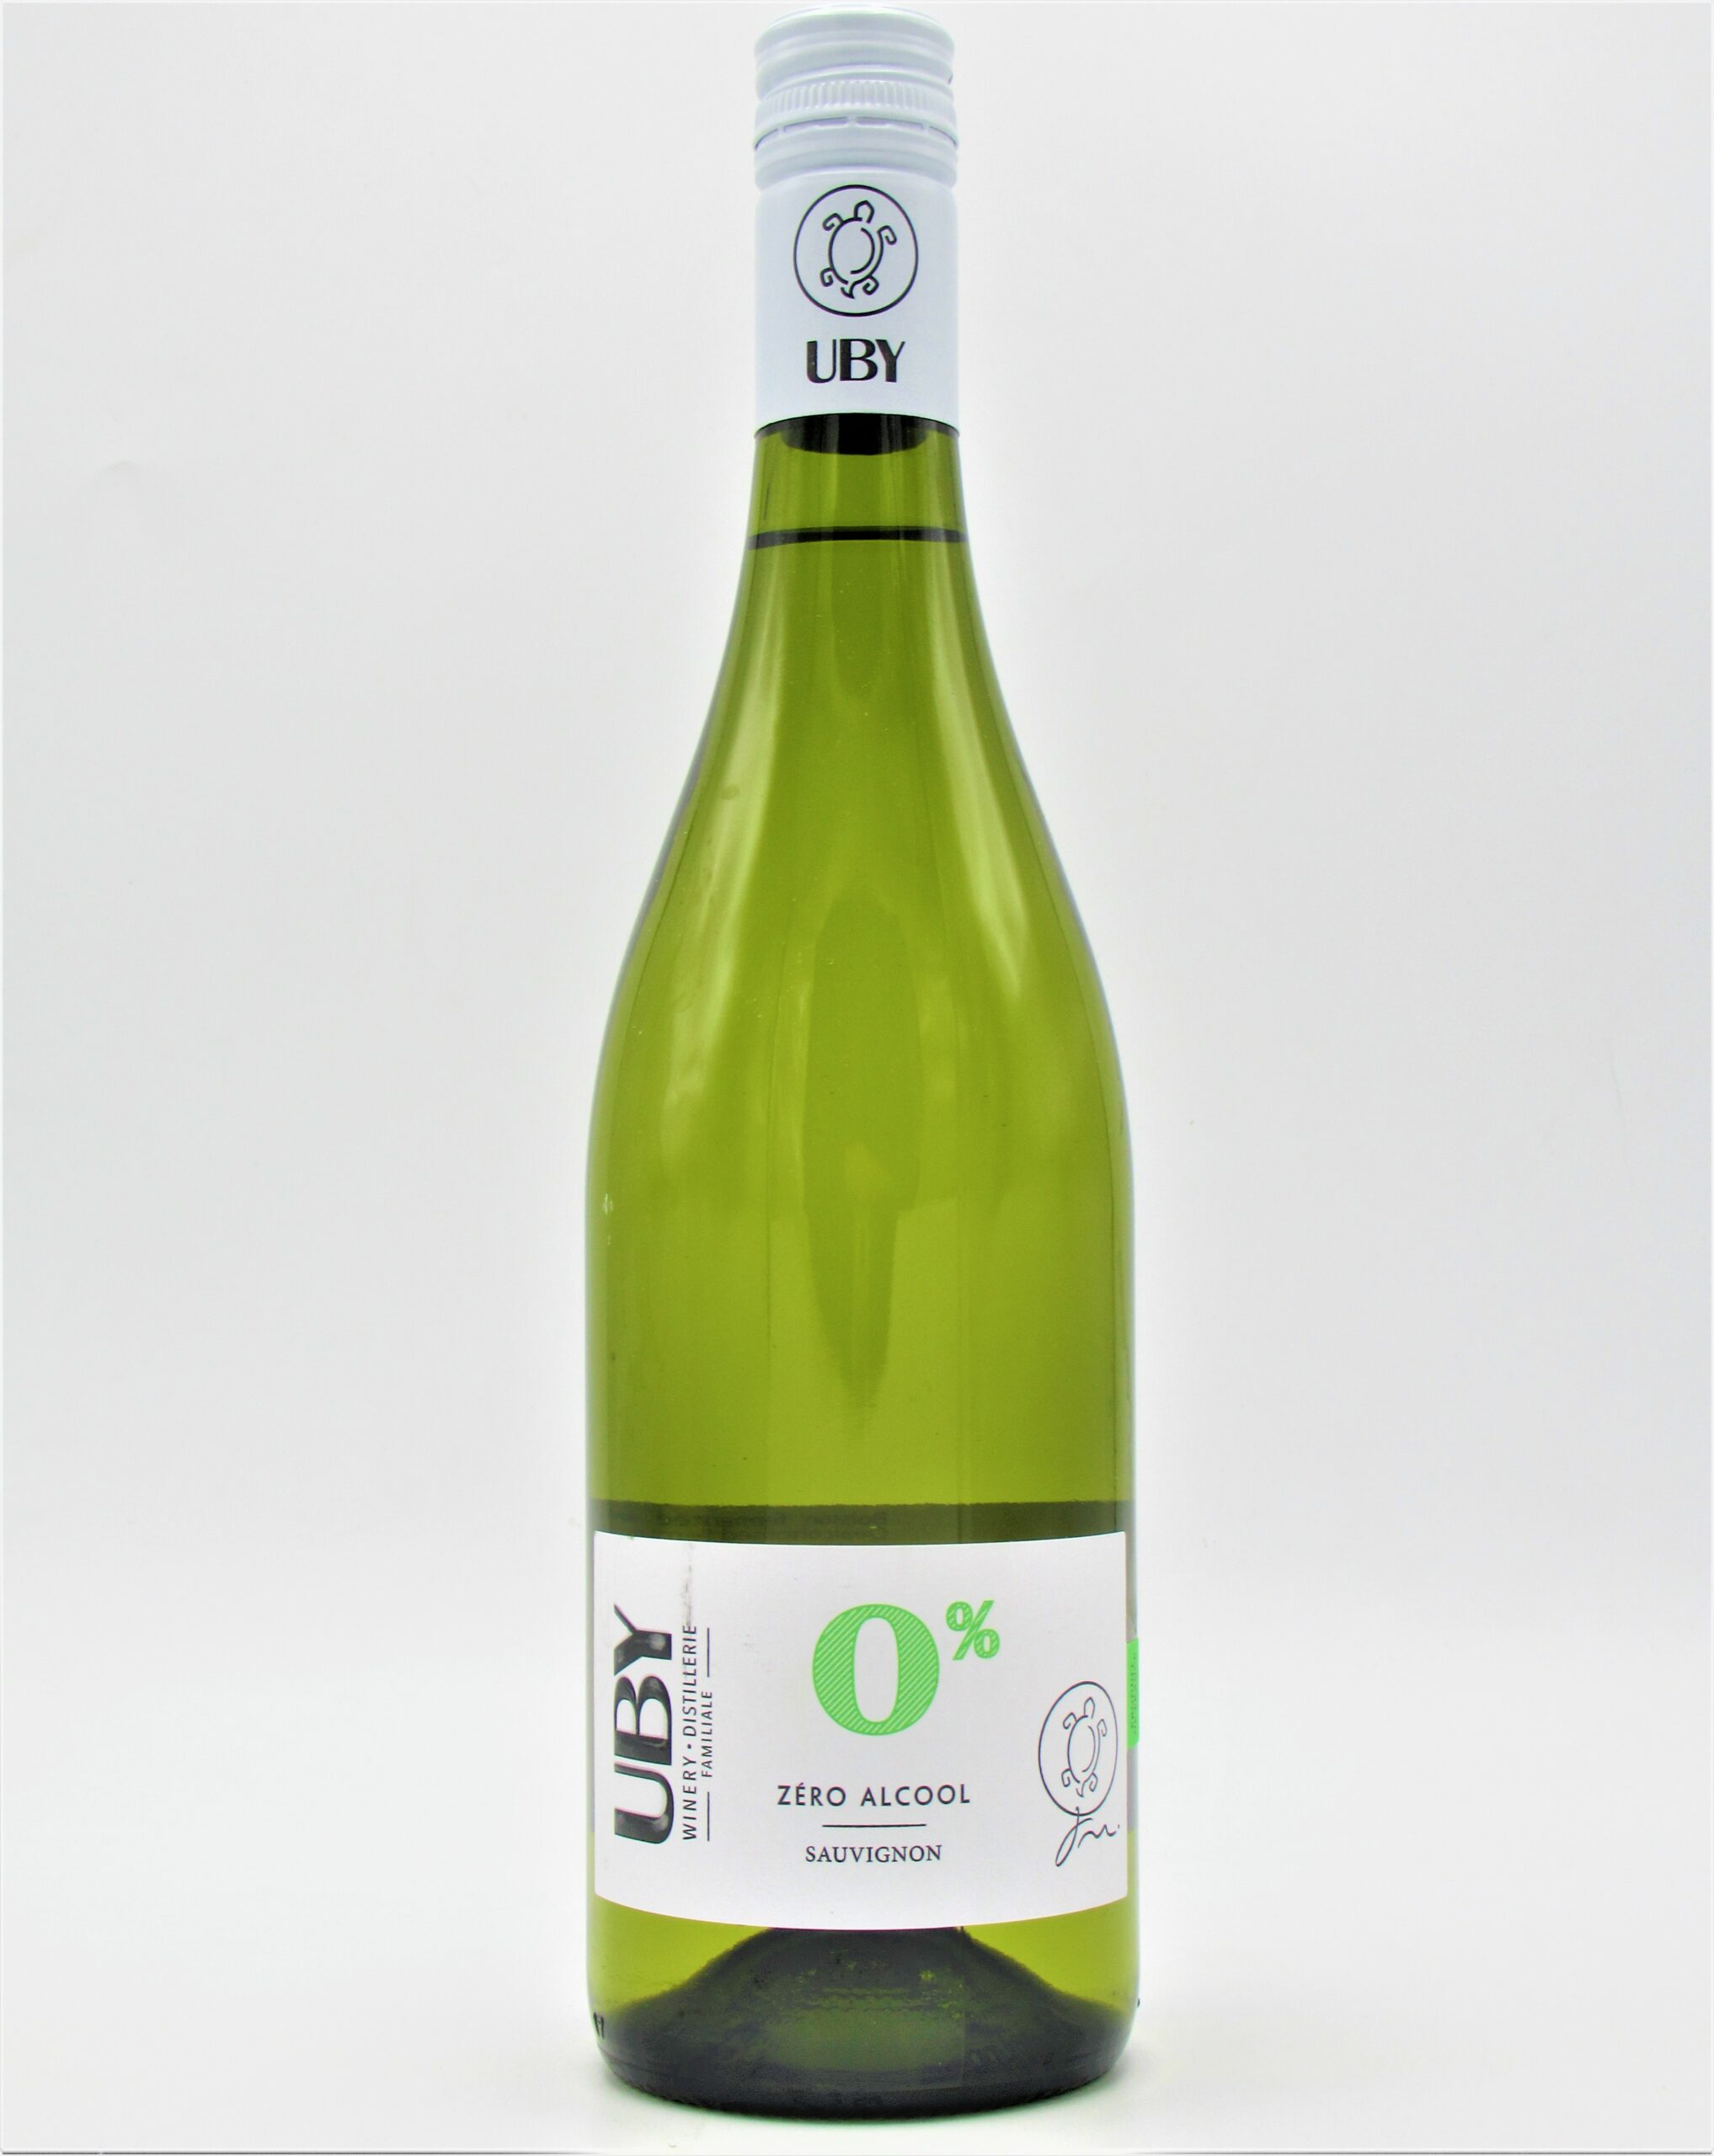 Vin Uby Zéro Alcool - Sauvignon Blanc au meilleur prix